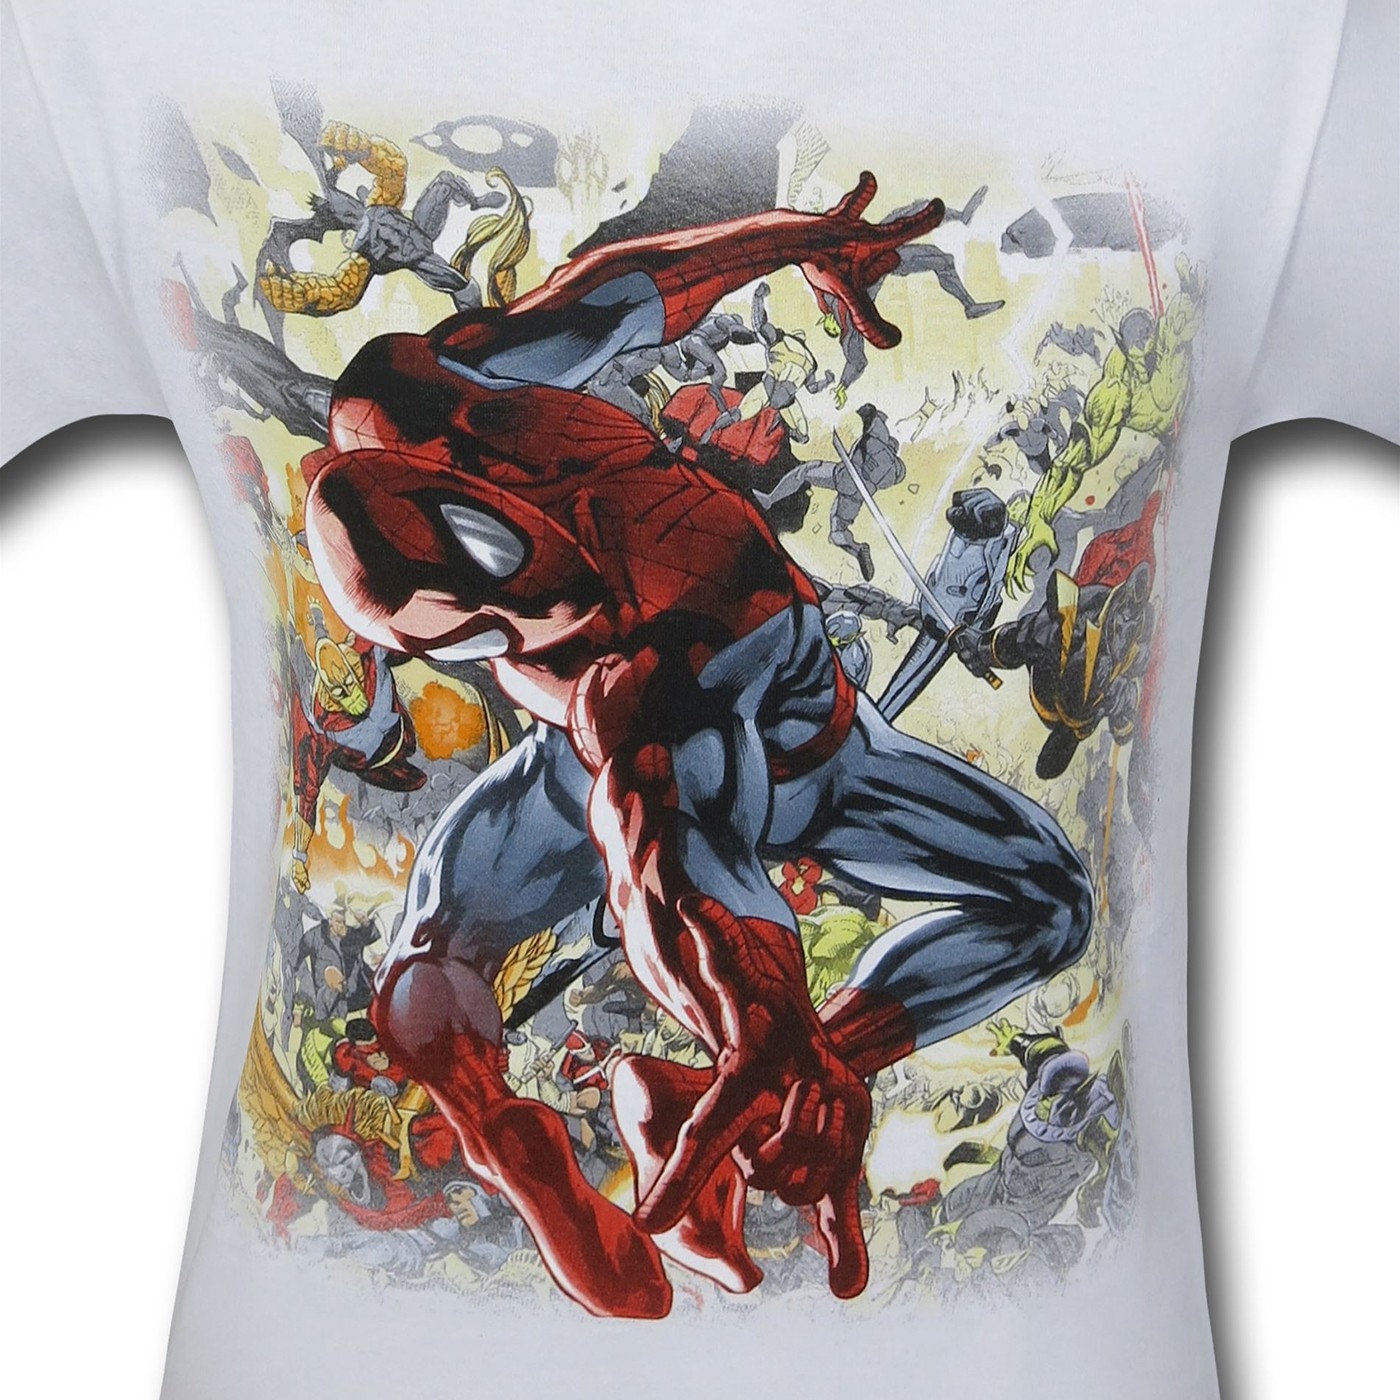 Spiderman Twisted Torso T-Shirt